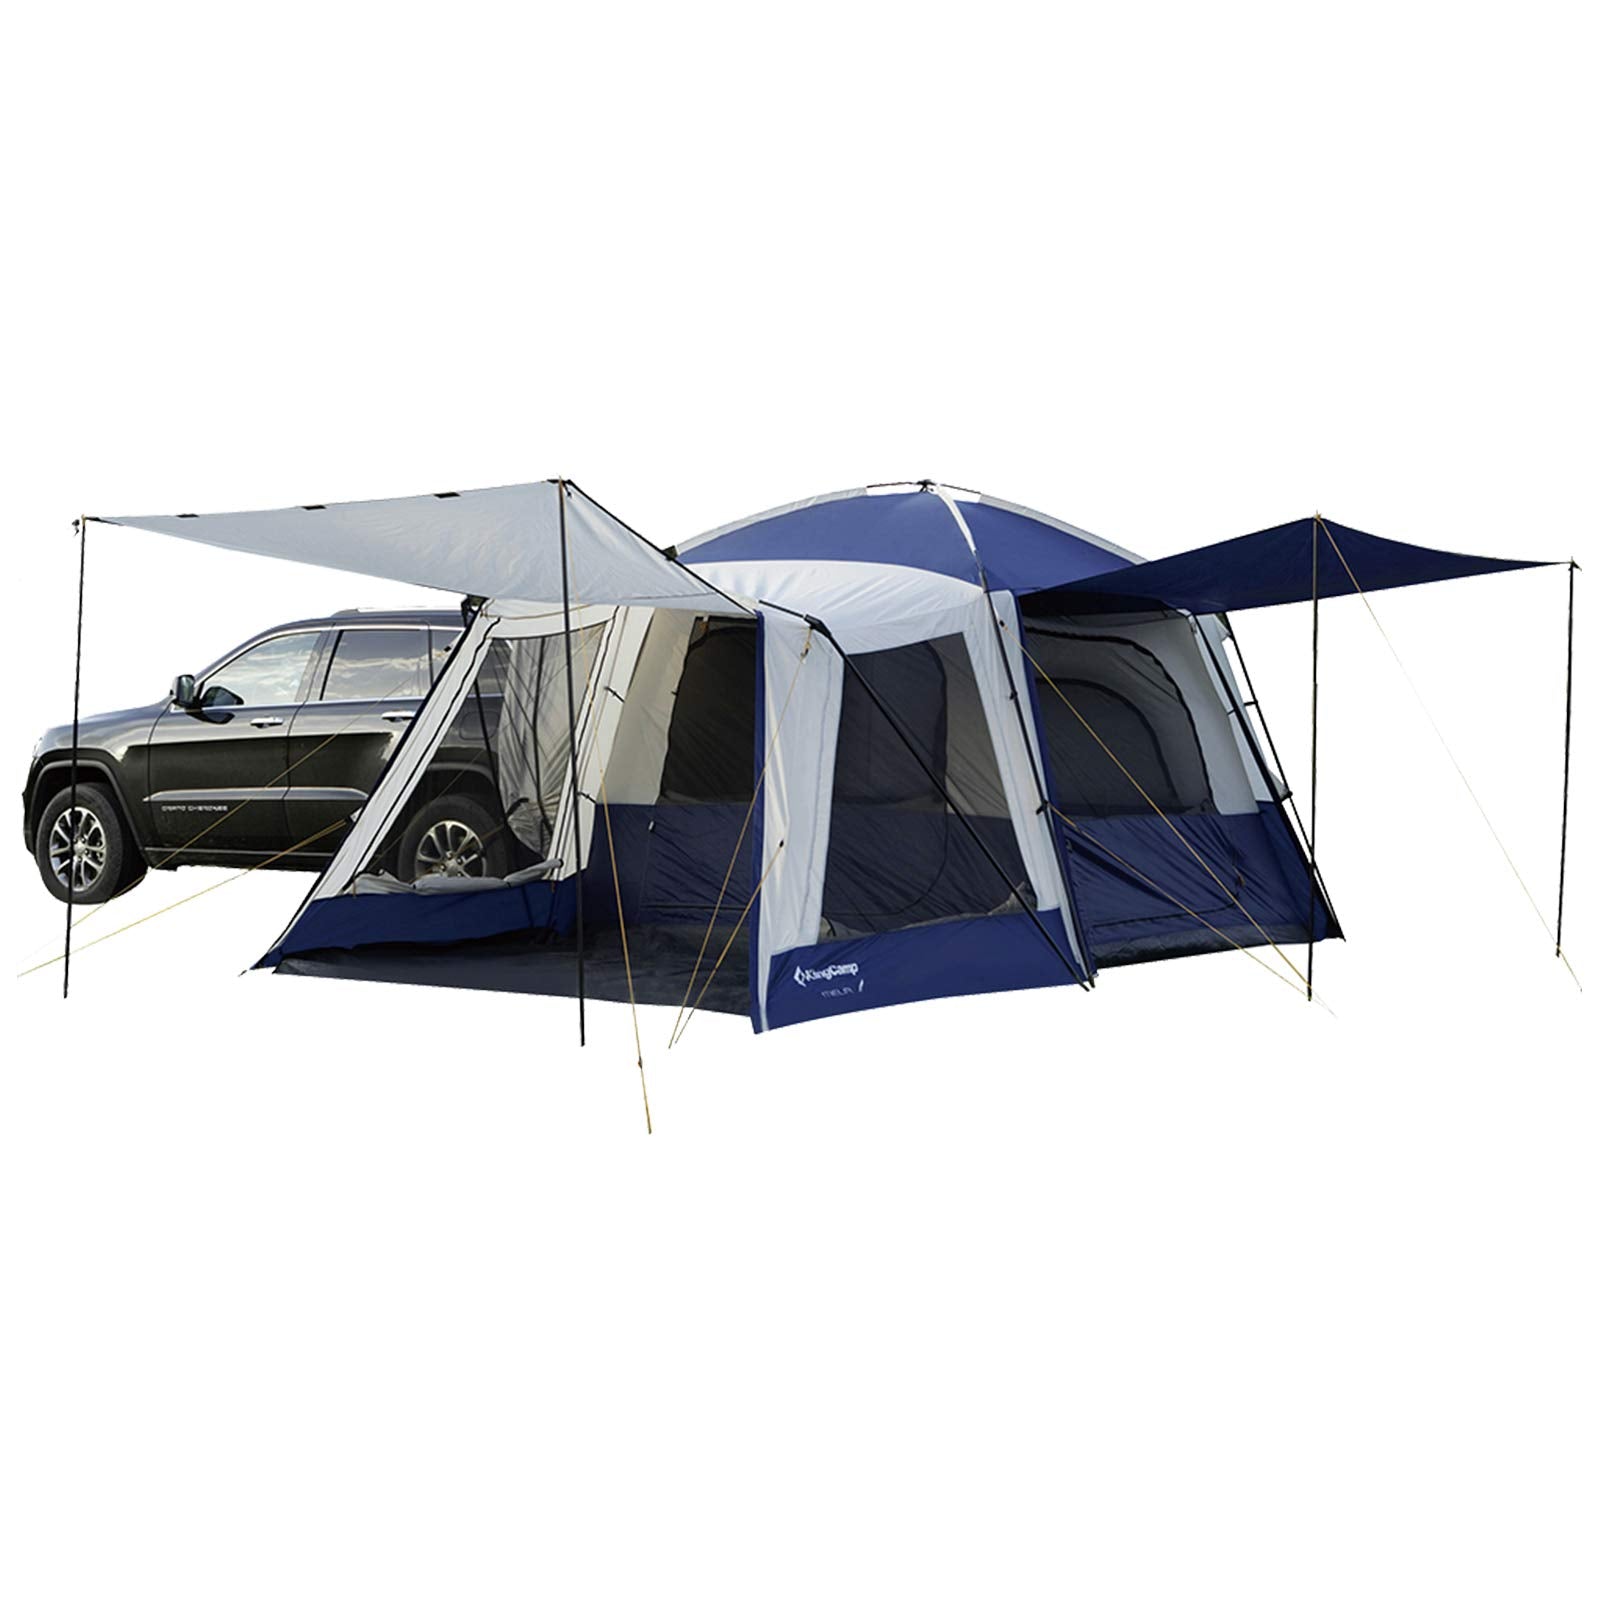 KingCamp Camping Square SUV Tent